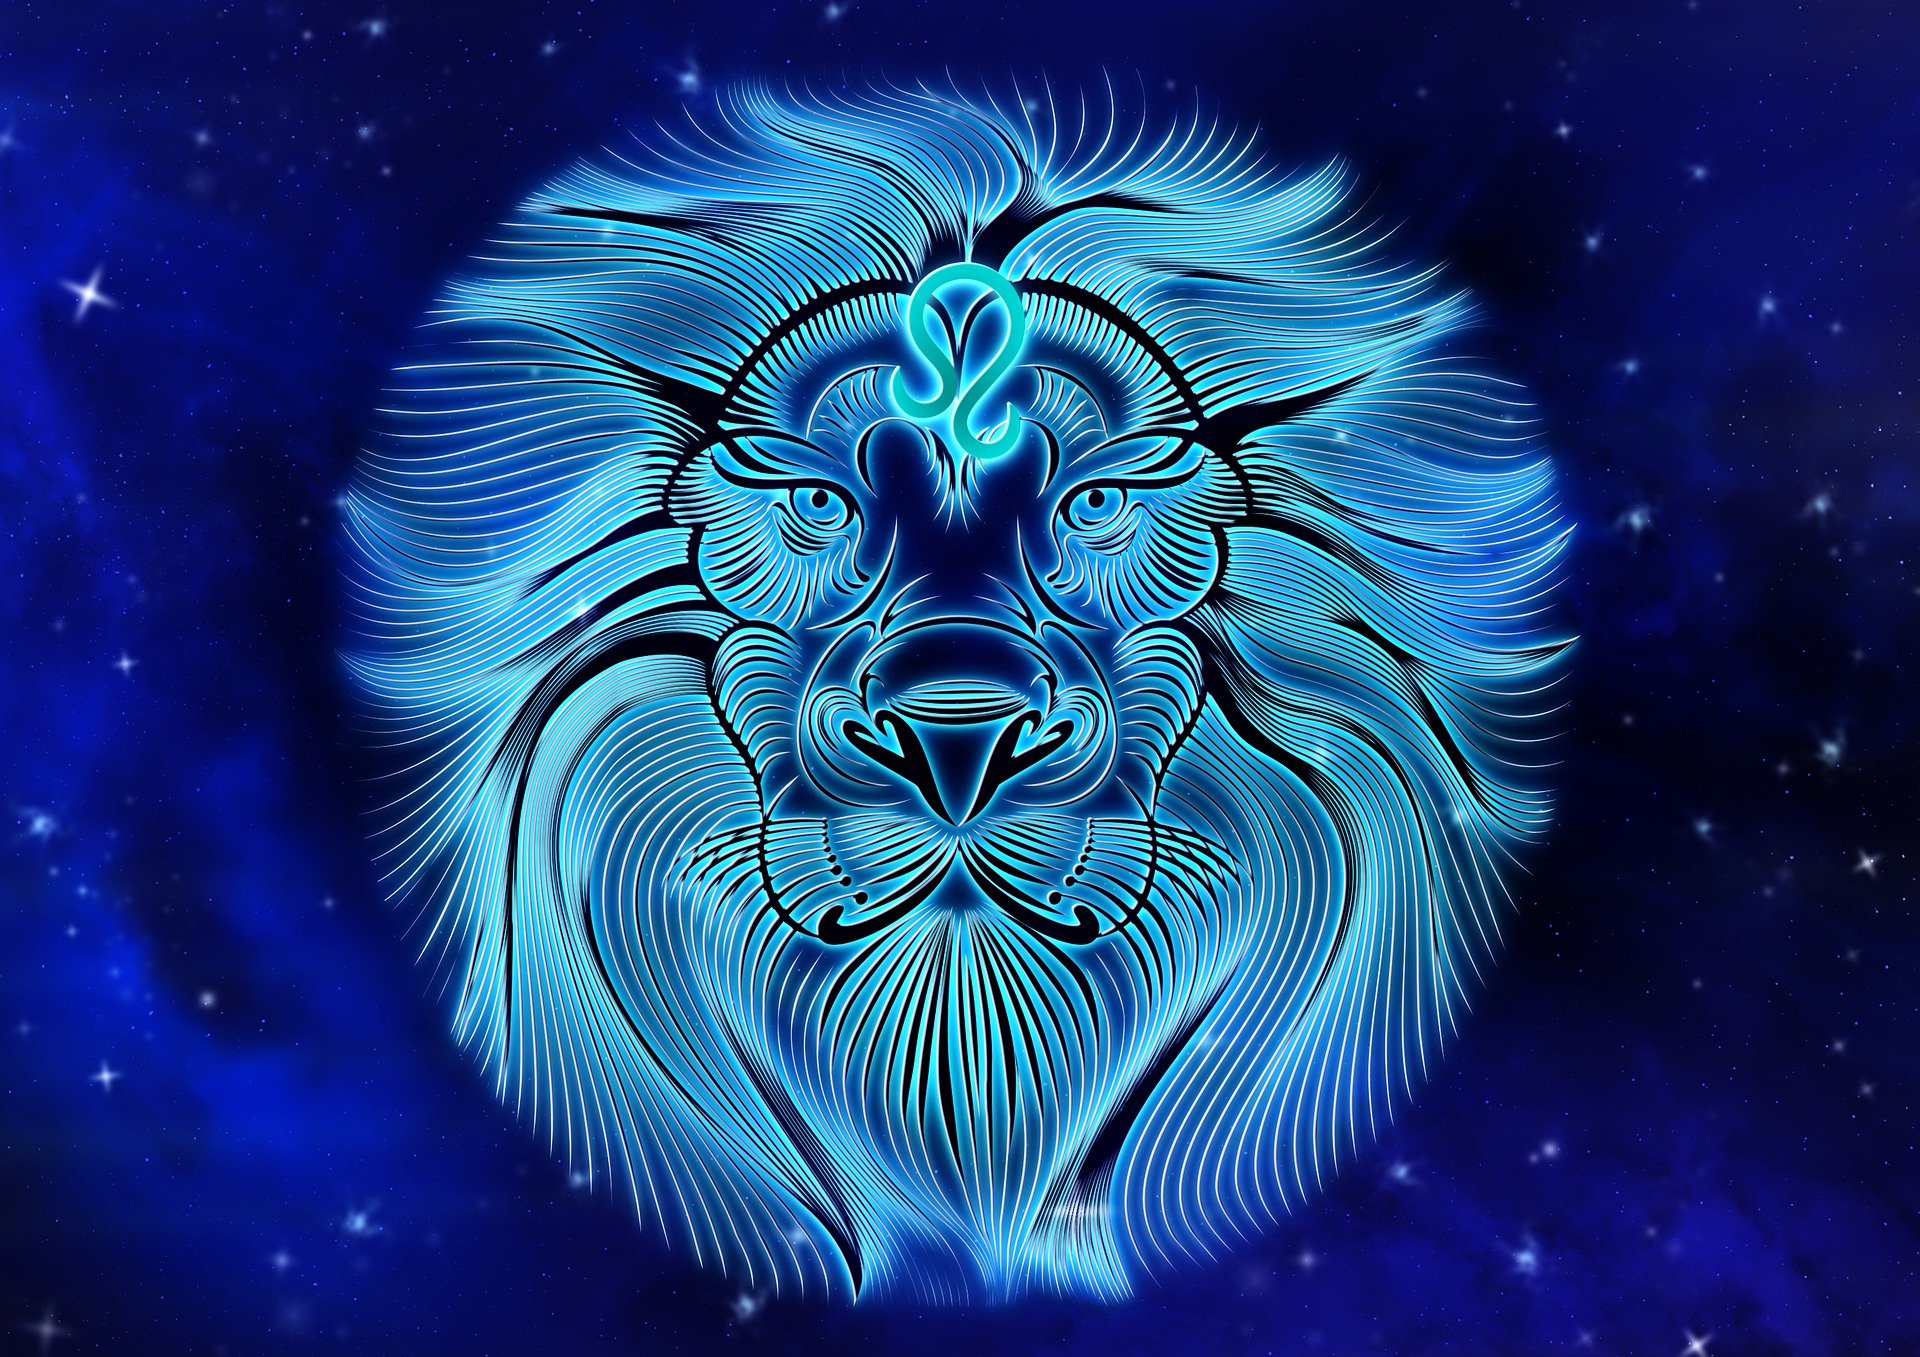 An illustration of a Leo star sign | Photo: Pixabay 